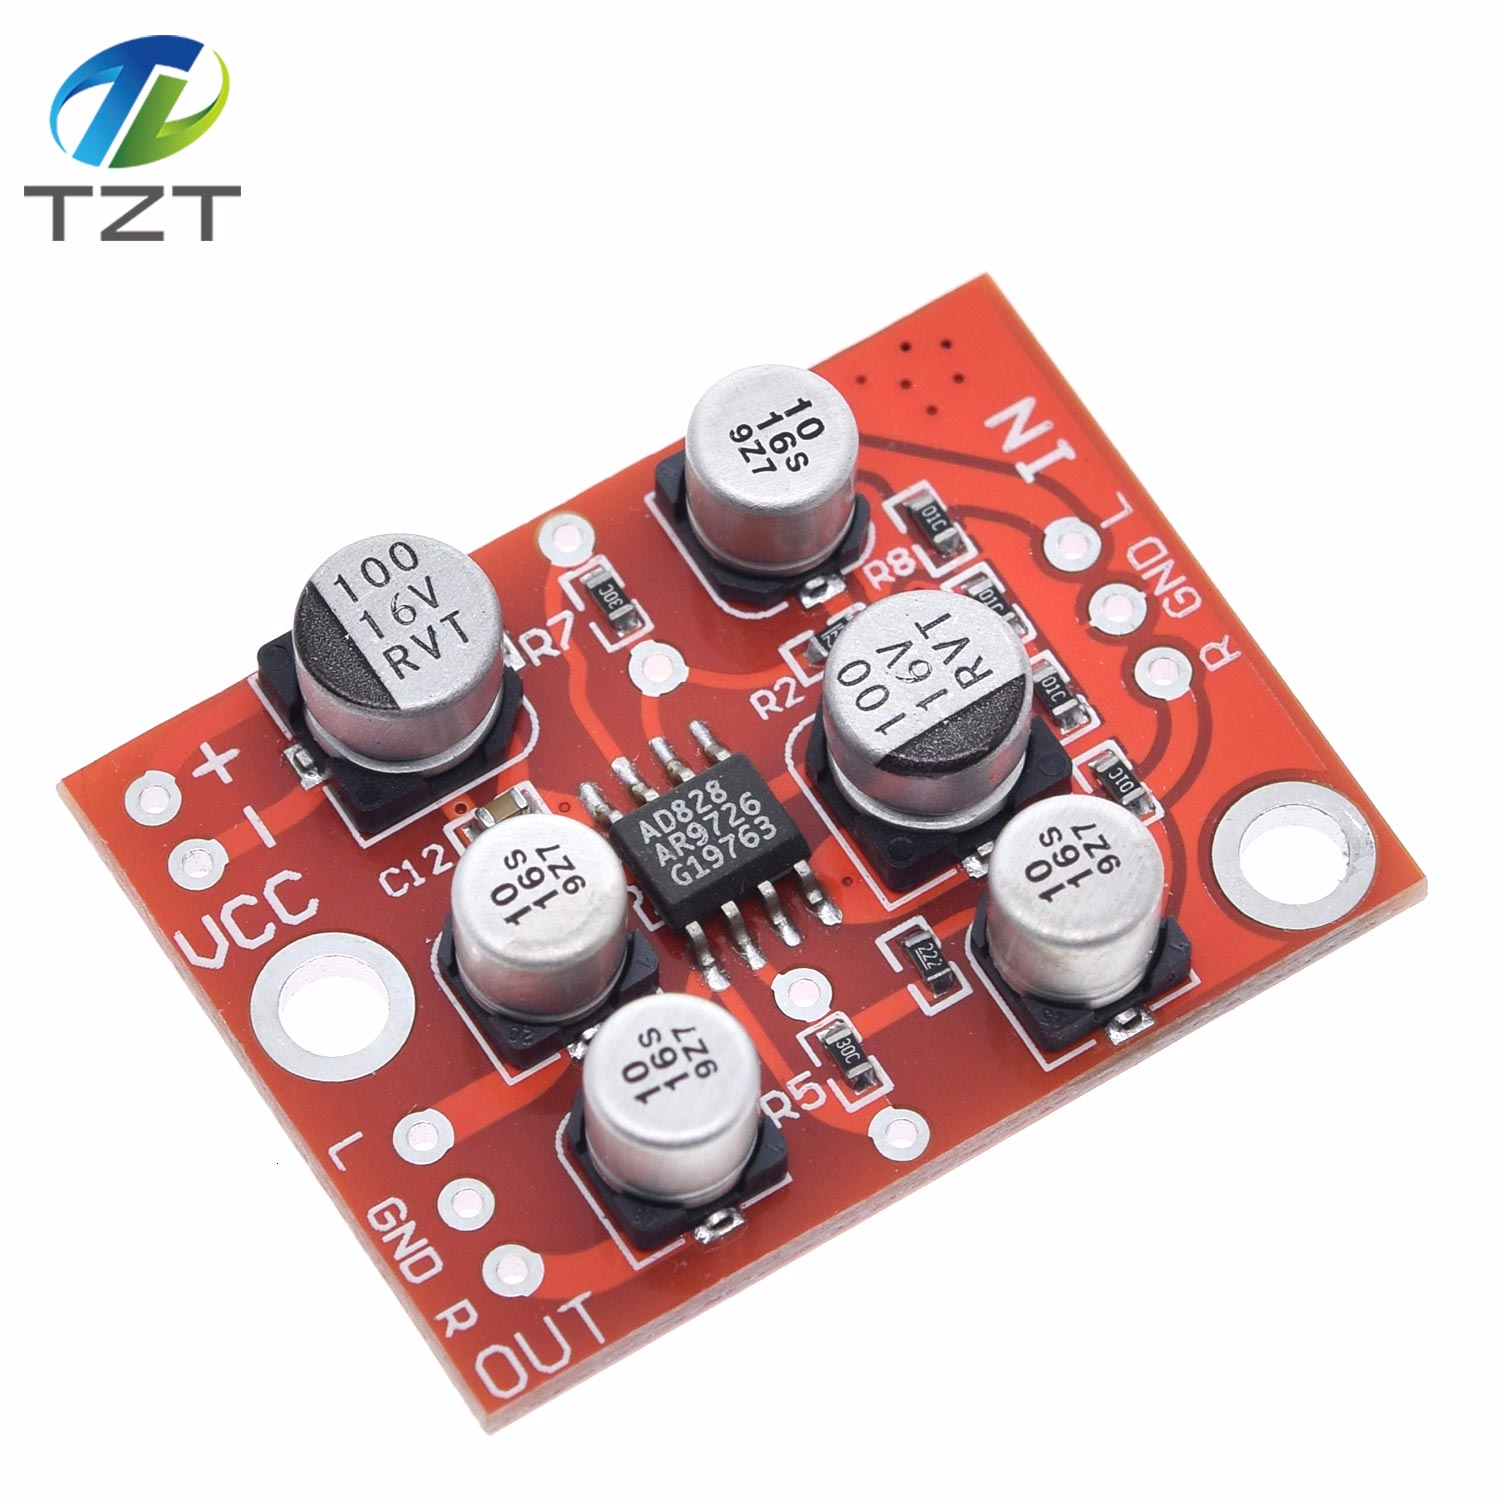 TZT  DC 5V-15V 12V AD828 Stereo Preamp Power Amplifier Board Preamplifier Module